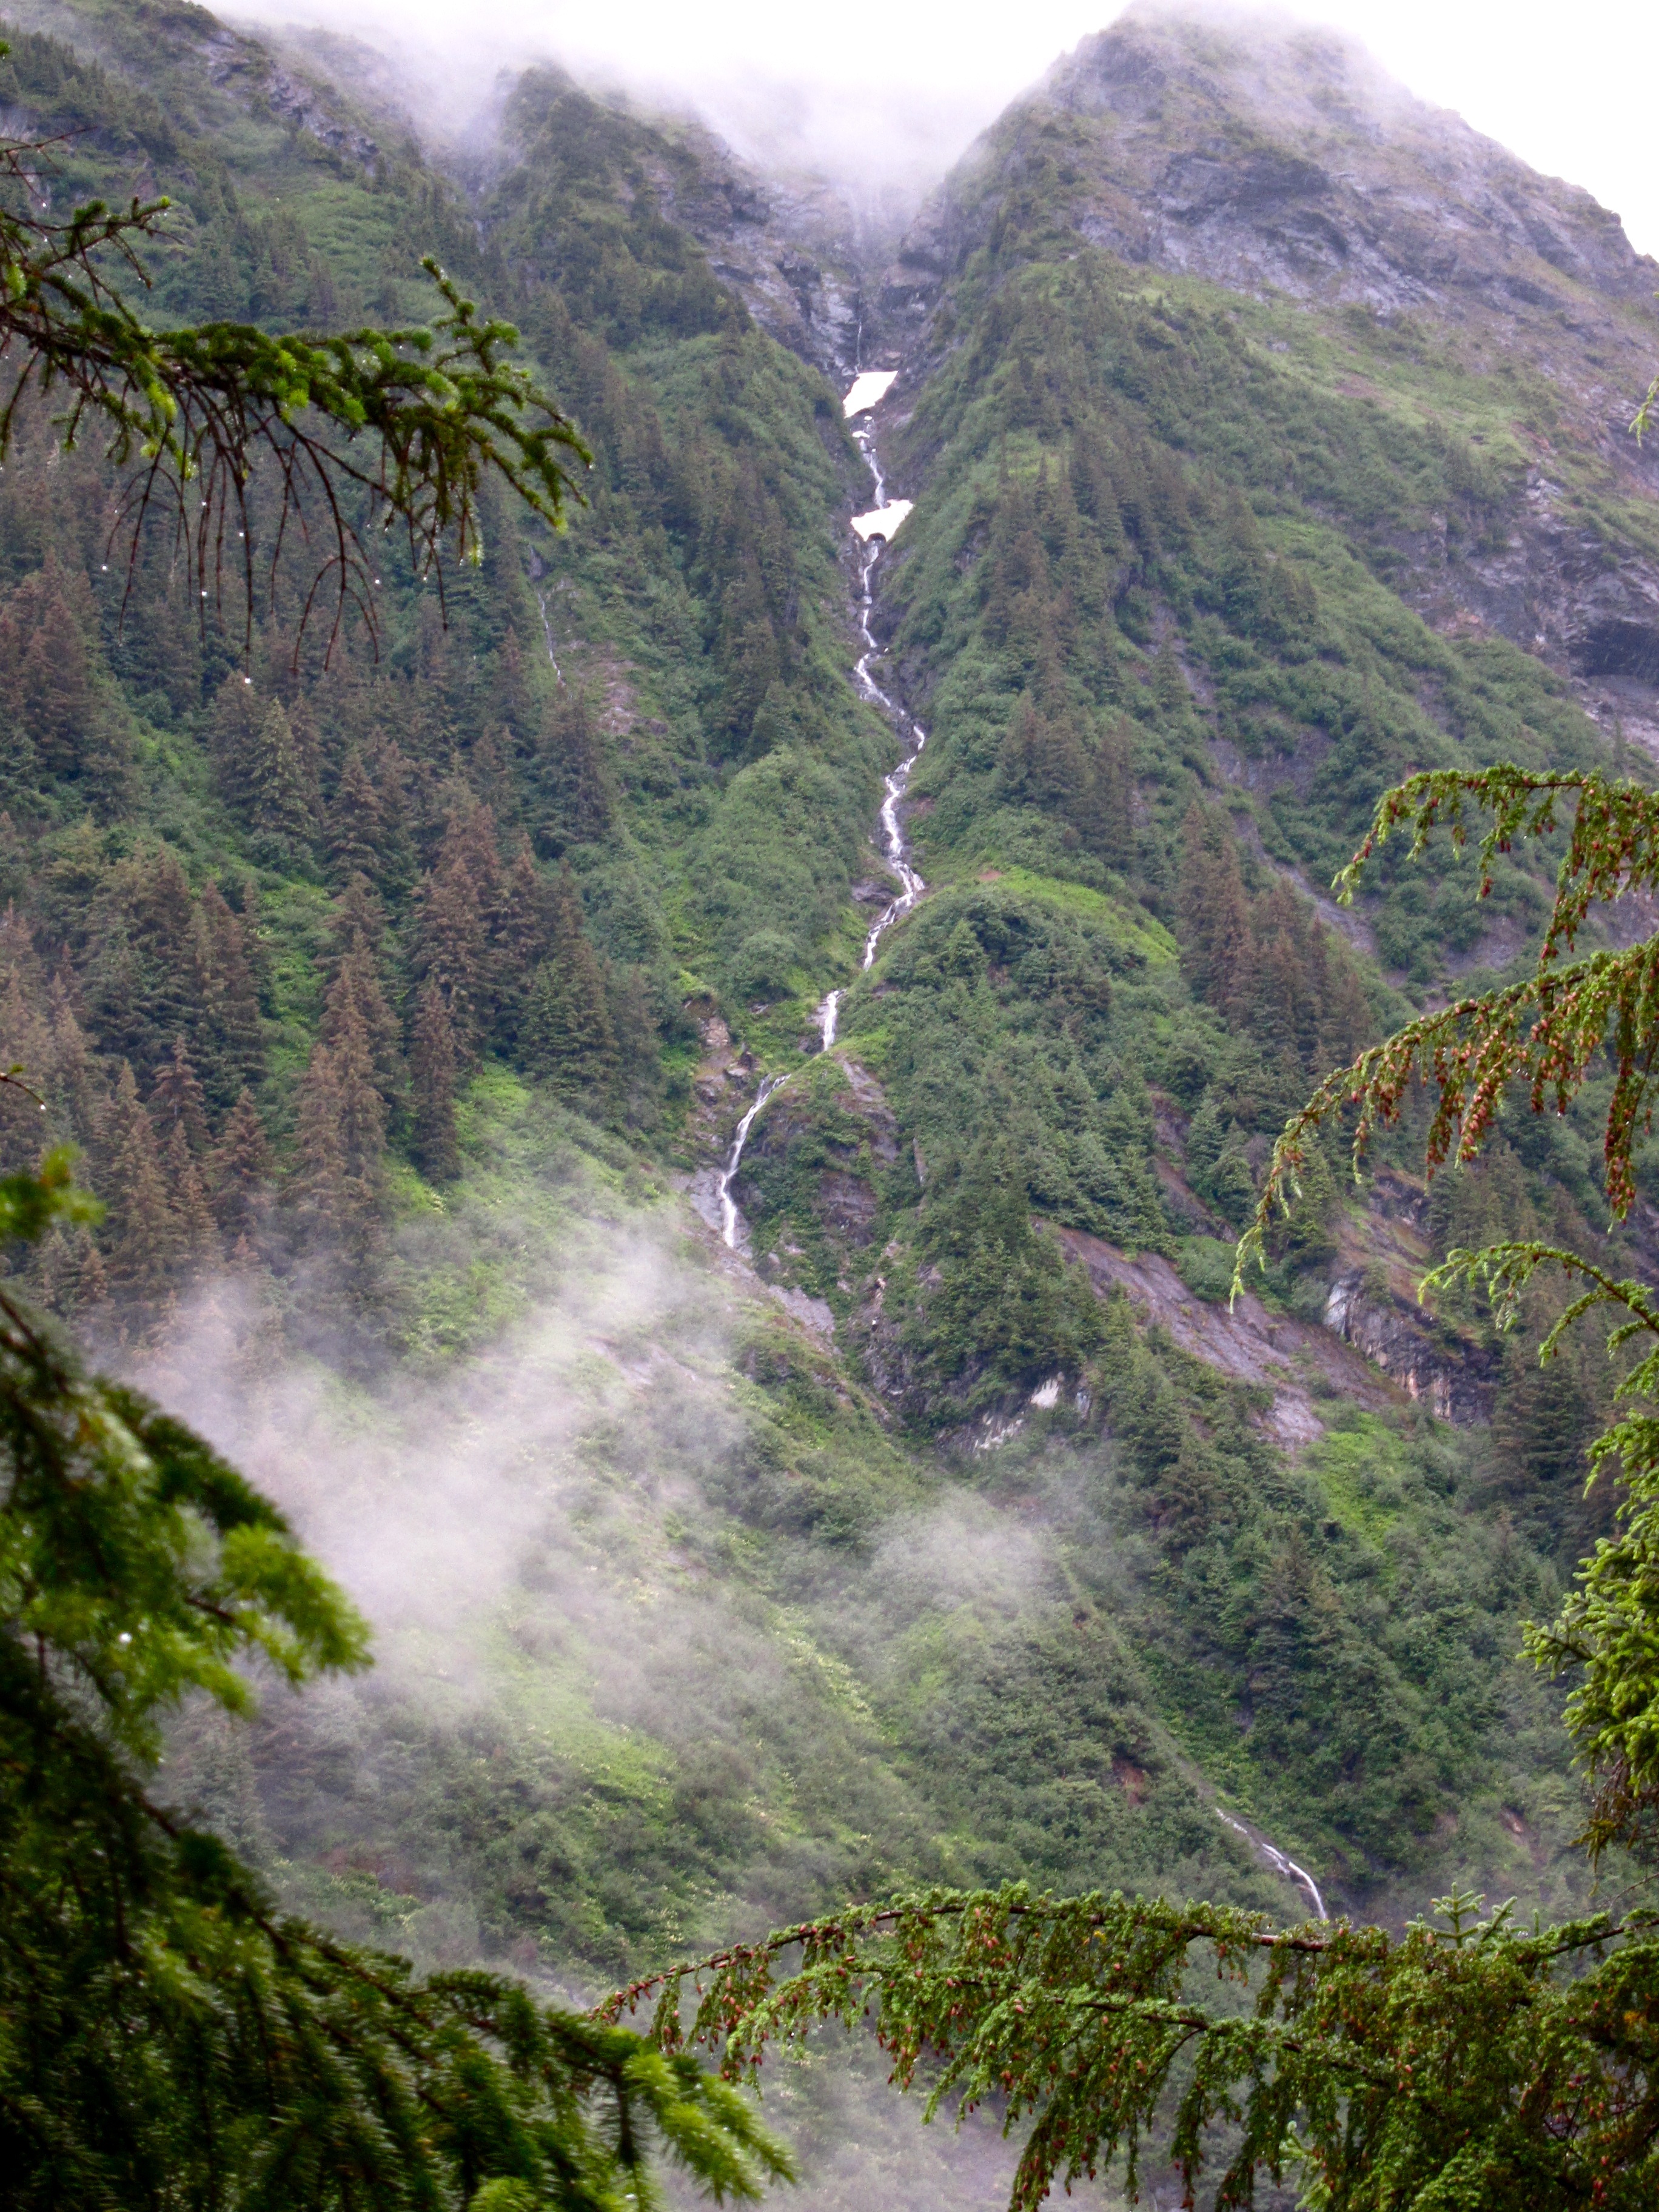 Waterfall near Mendenhall Glacier